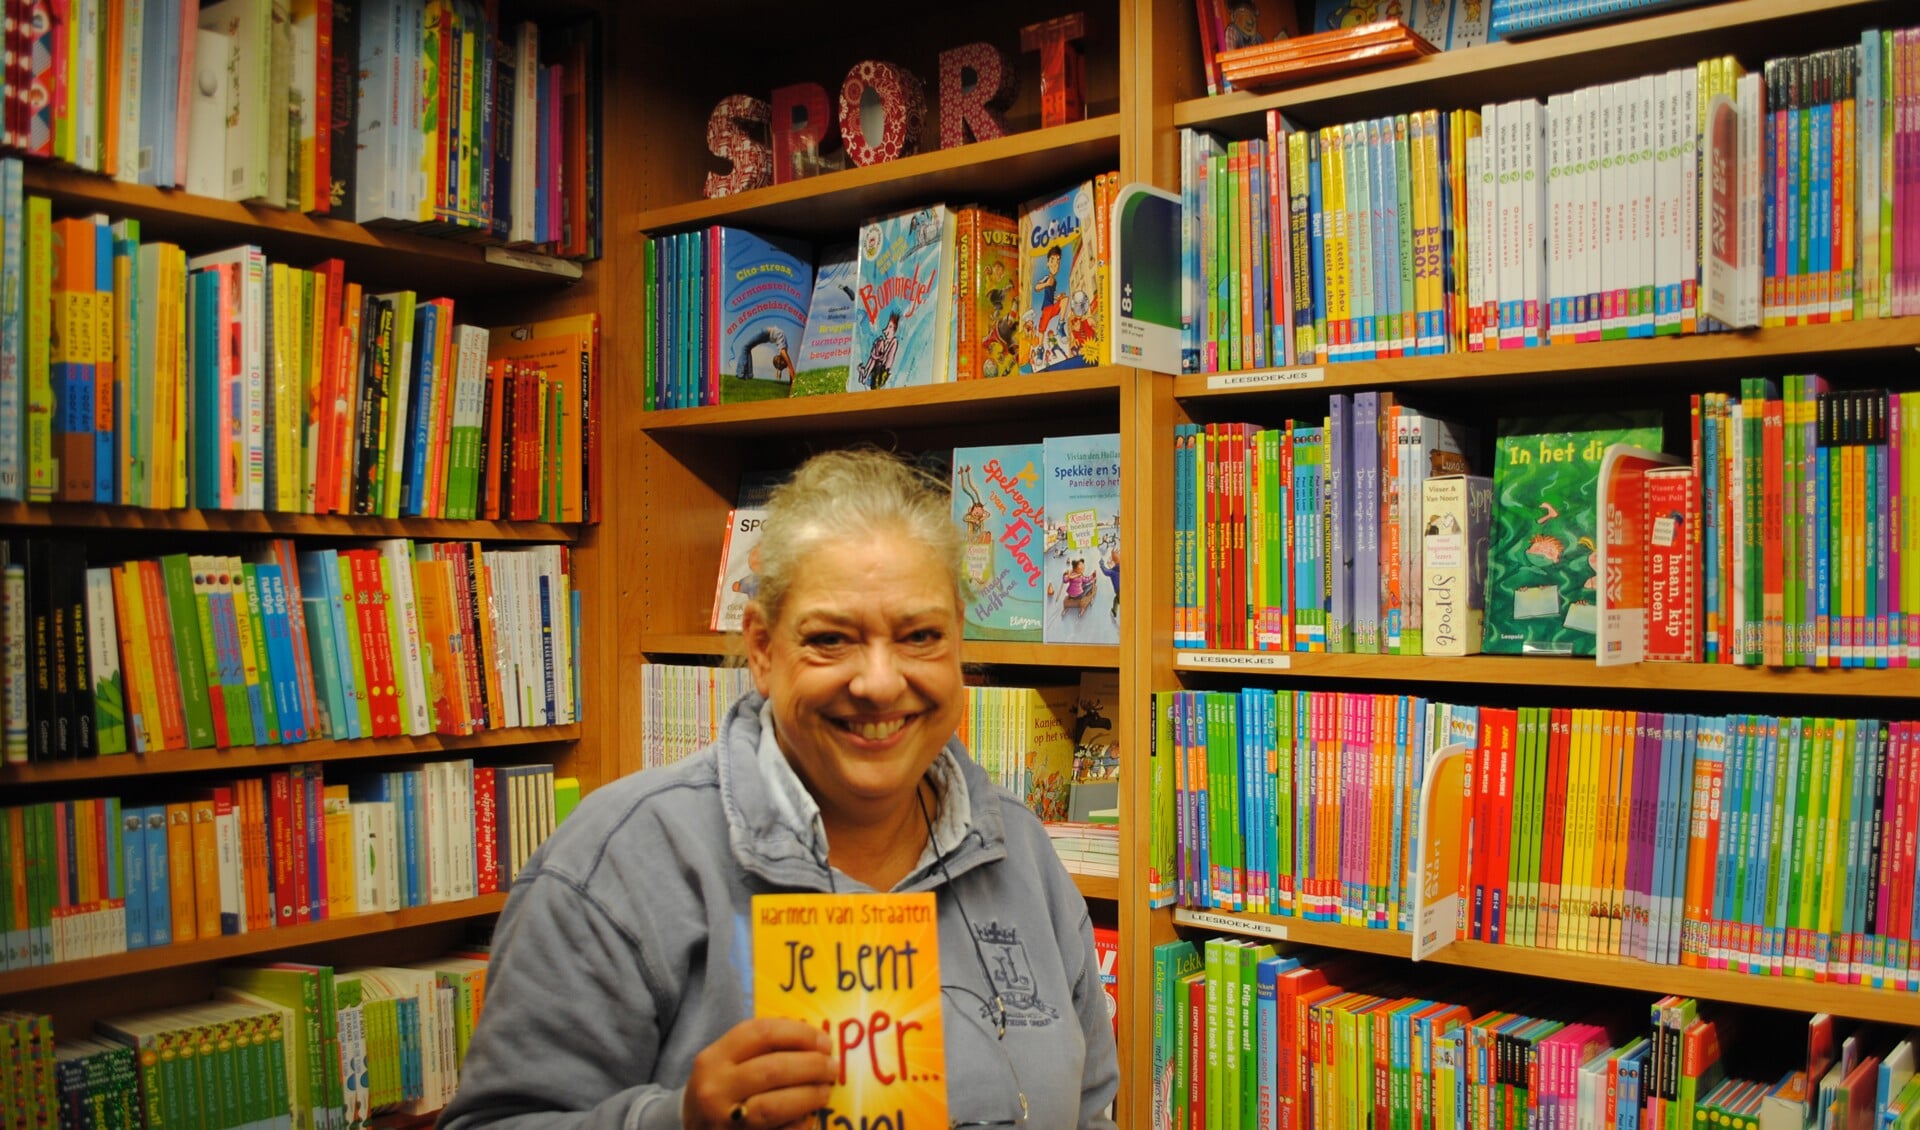 De kinderboekenweek wordt groots gevierd in Boekhandel Los